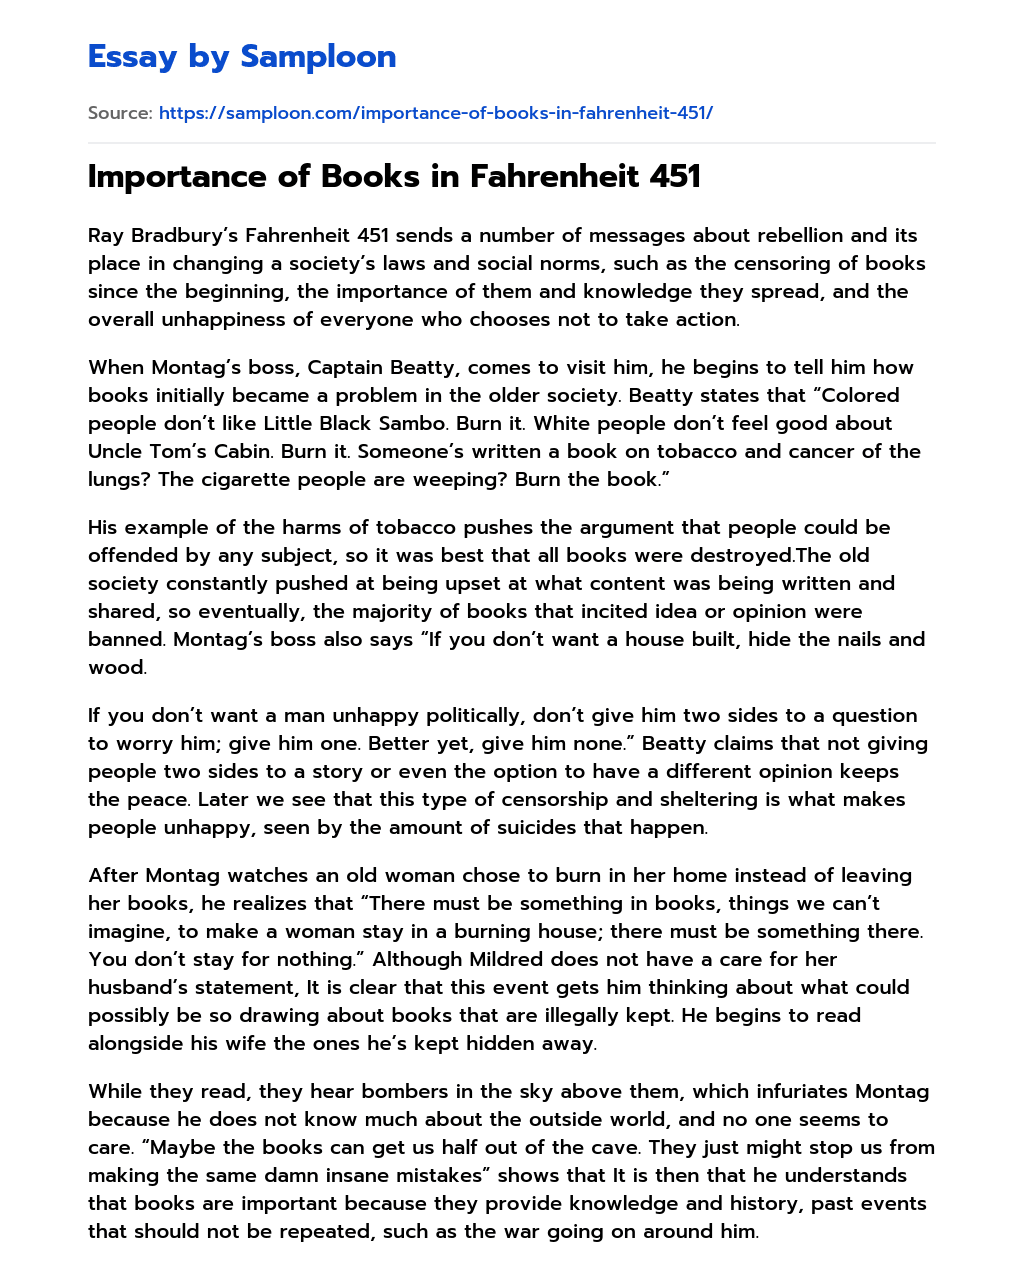 Importance of Books in Fahrenheit 451 essay